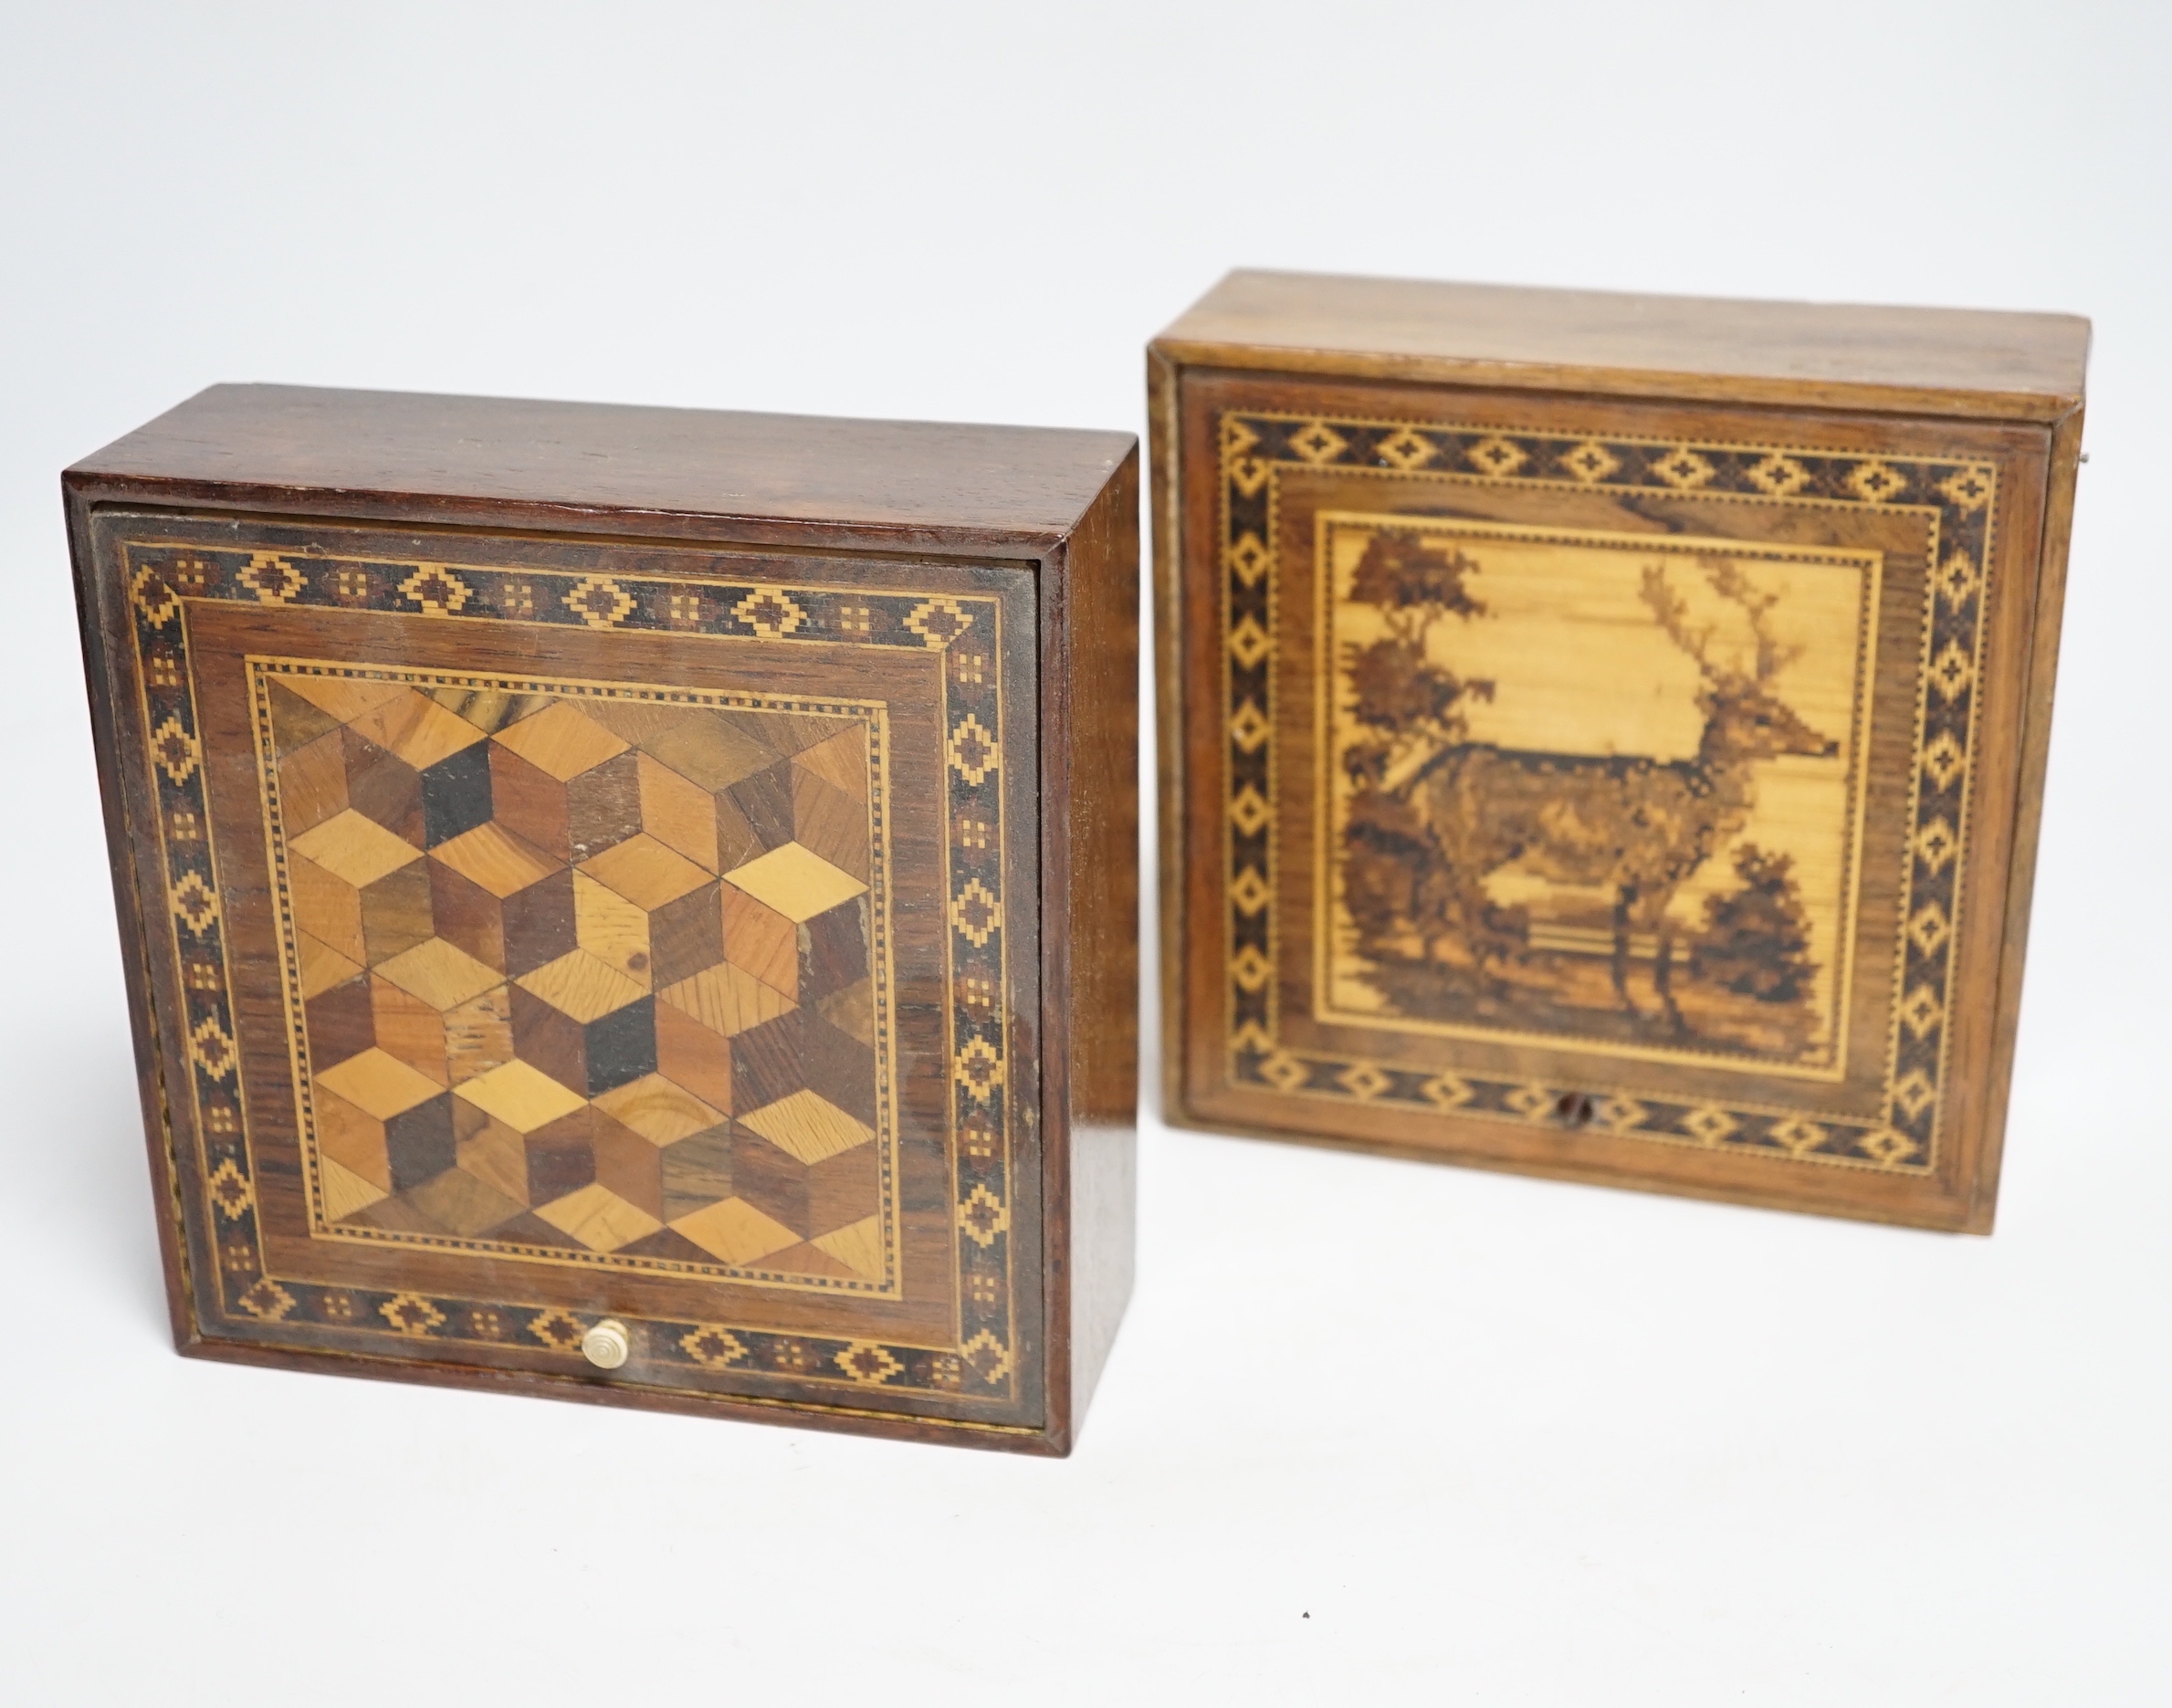 Two 19th century Tunbridge ware tesserae mosaic rosewood boxes